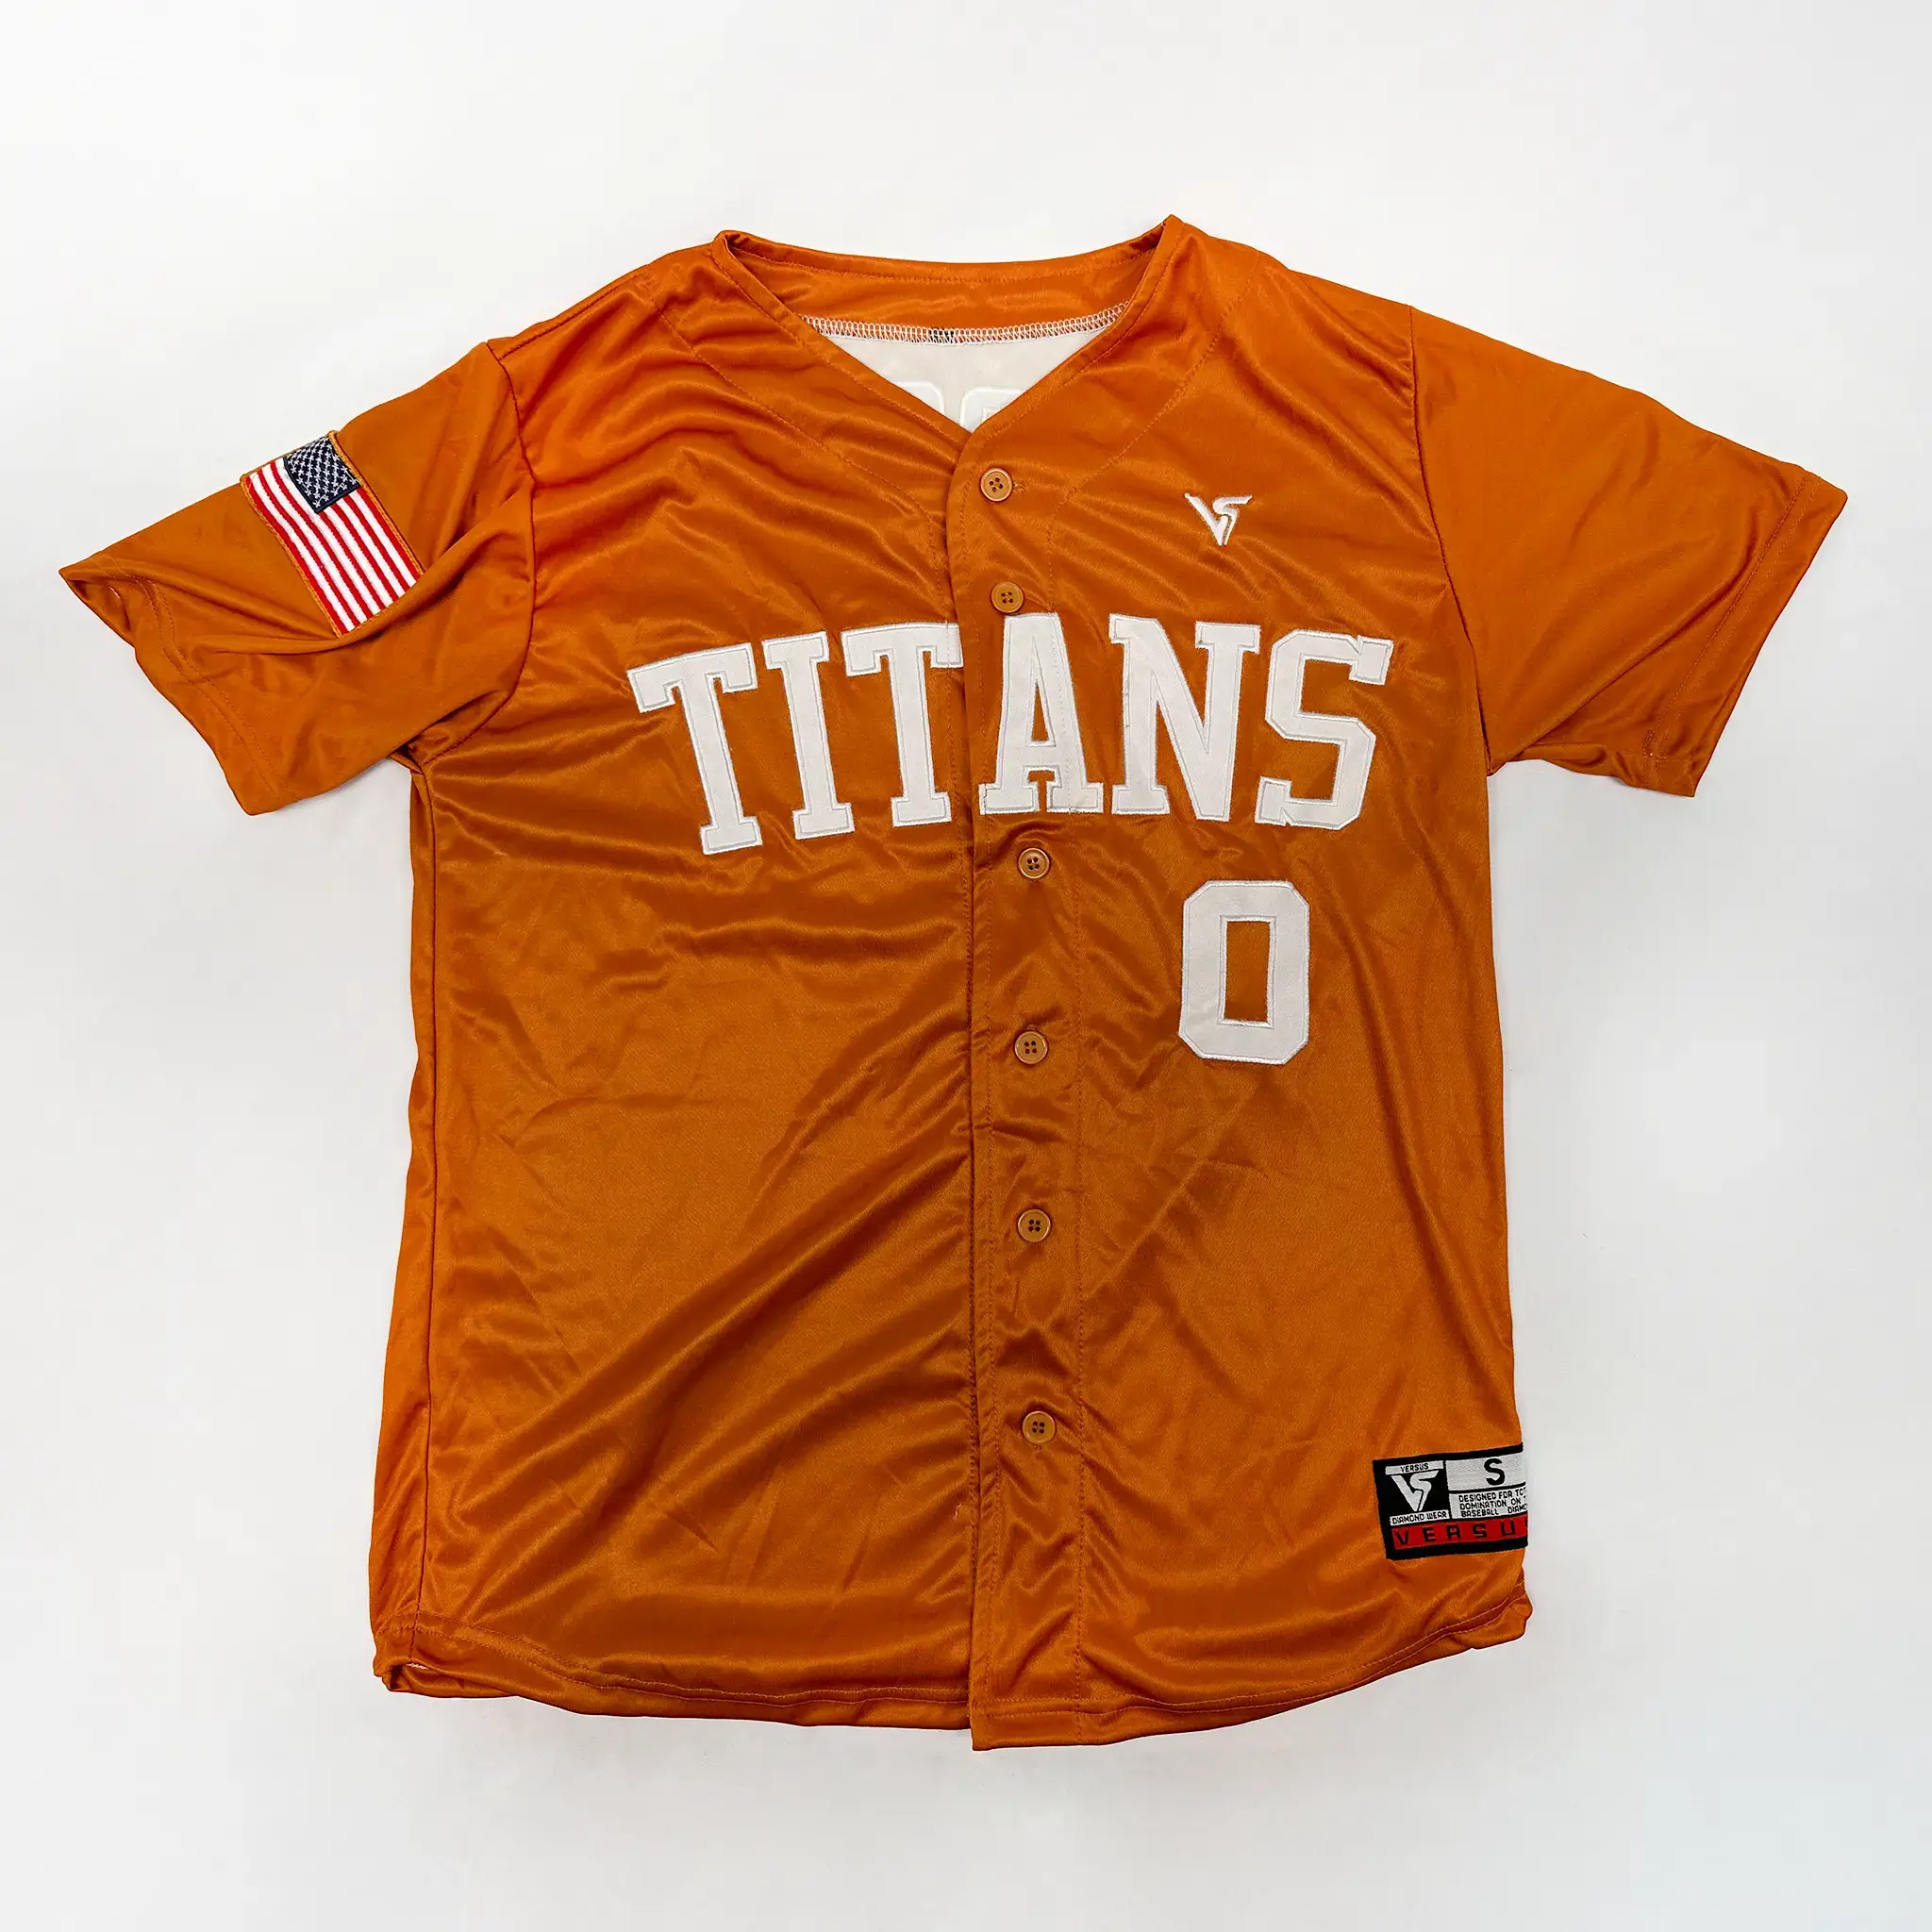 Orange Titans Baseball Jersey